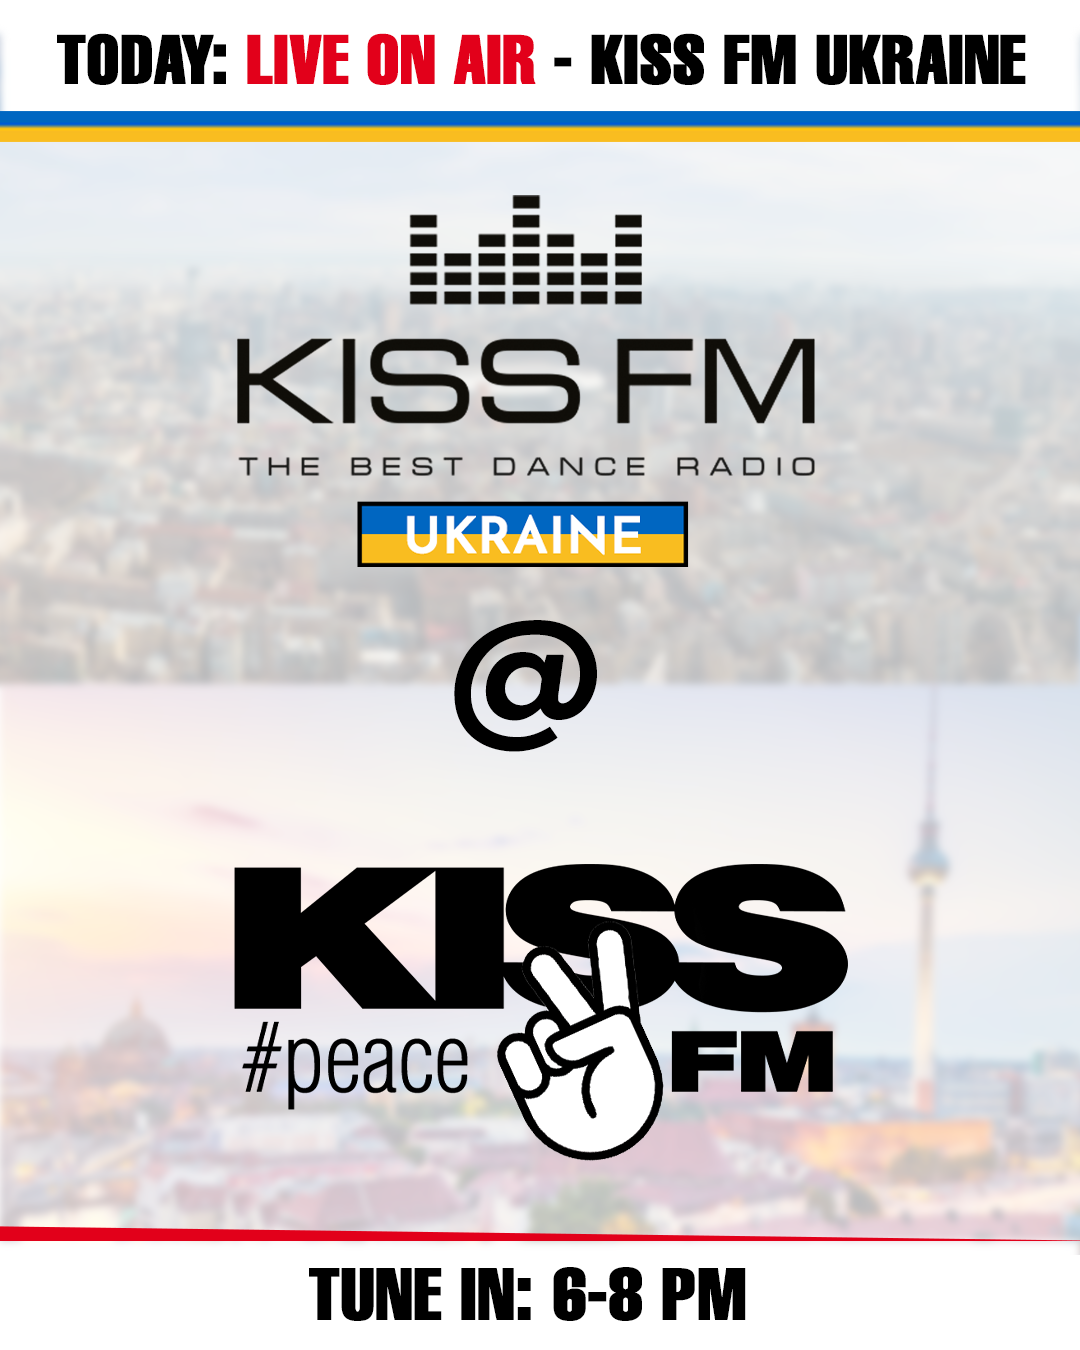 KISSFM Ukraine